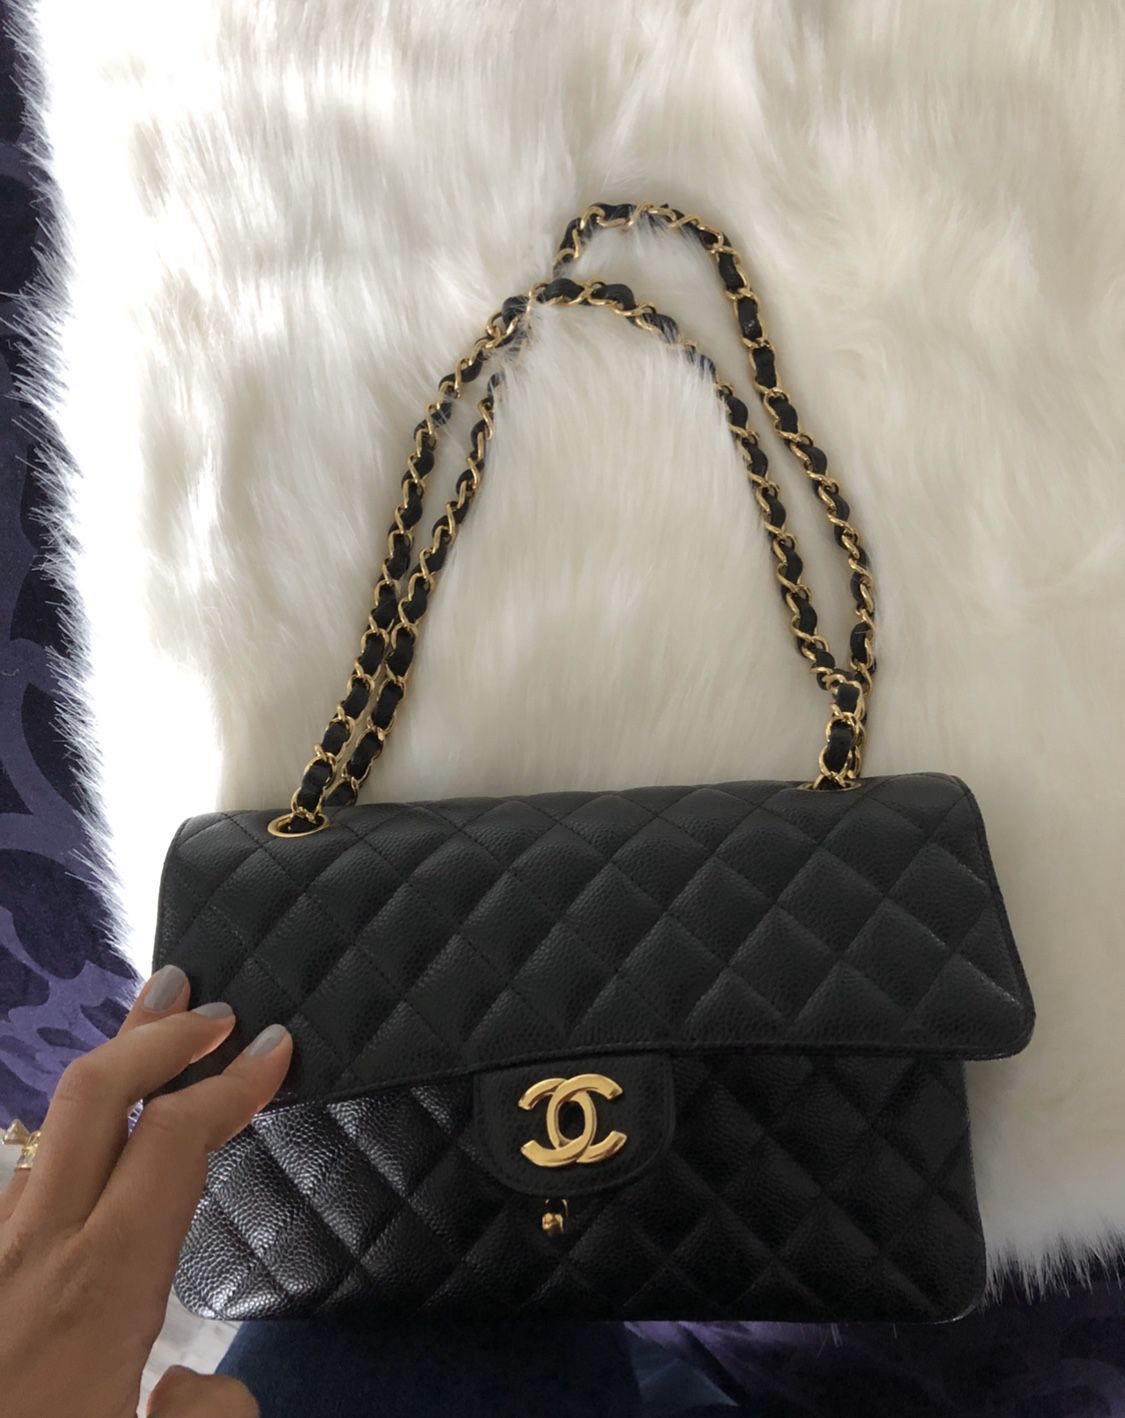 Authentic Chanel classic flap bag